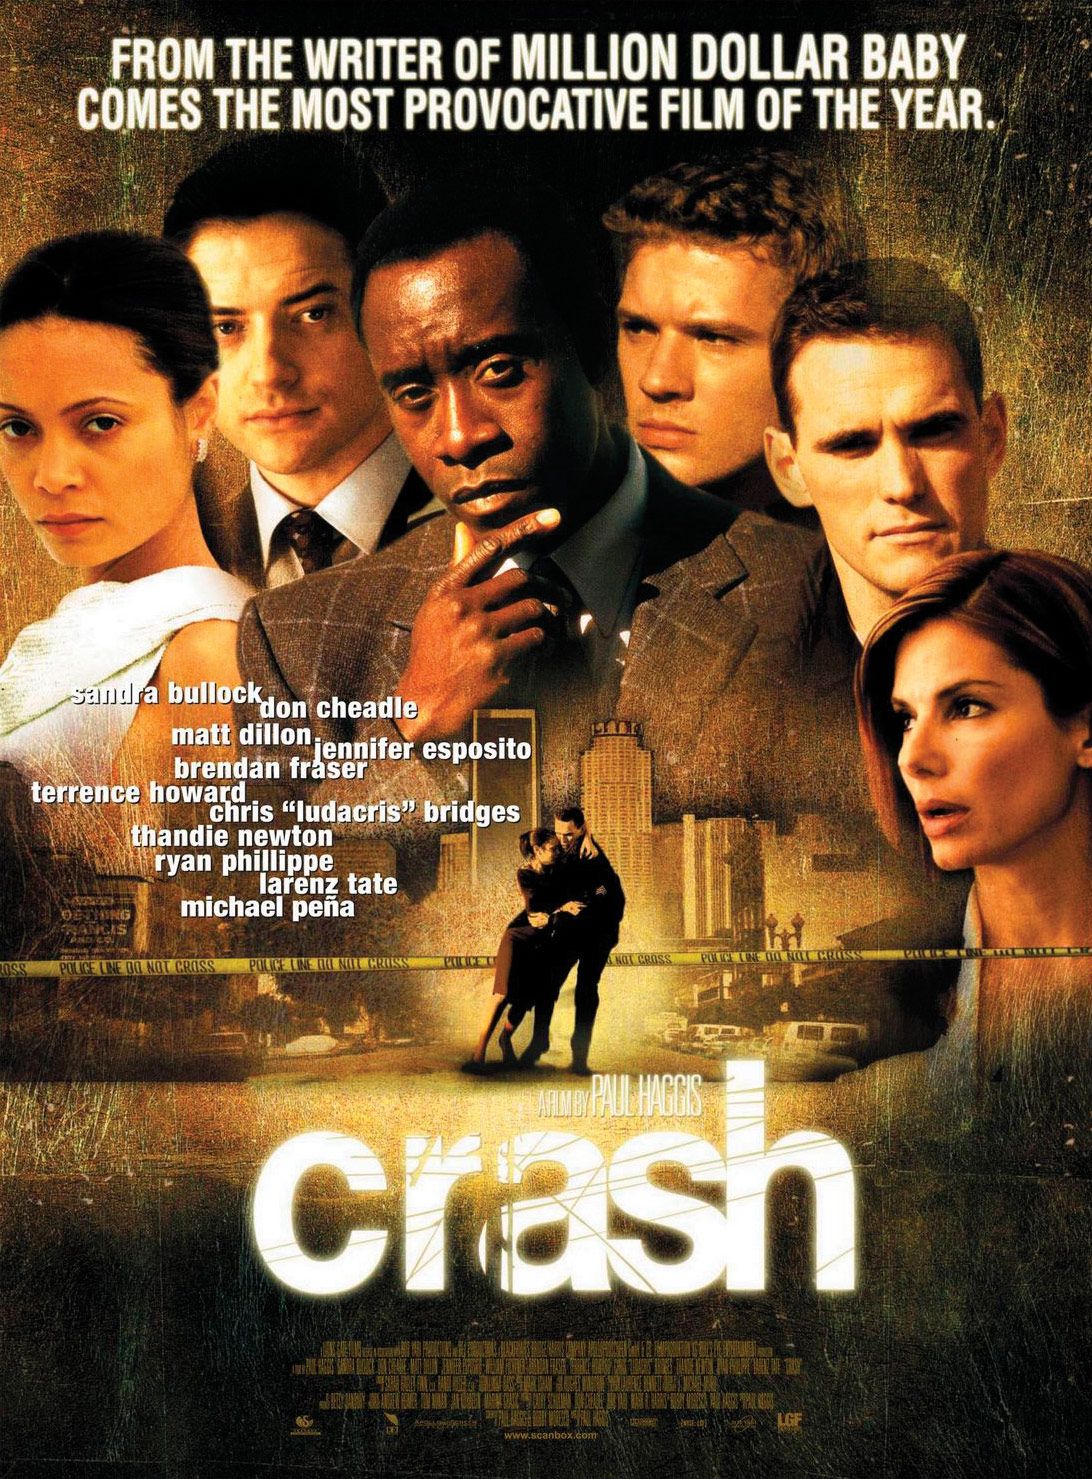 Crash Movie